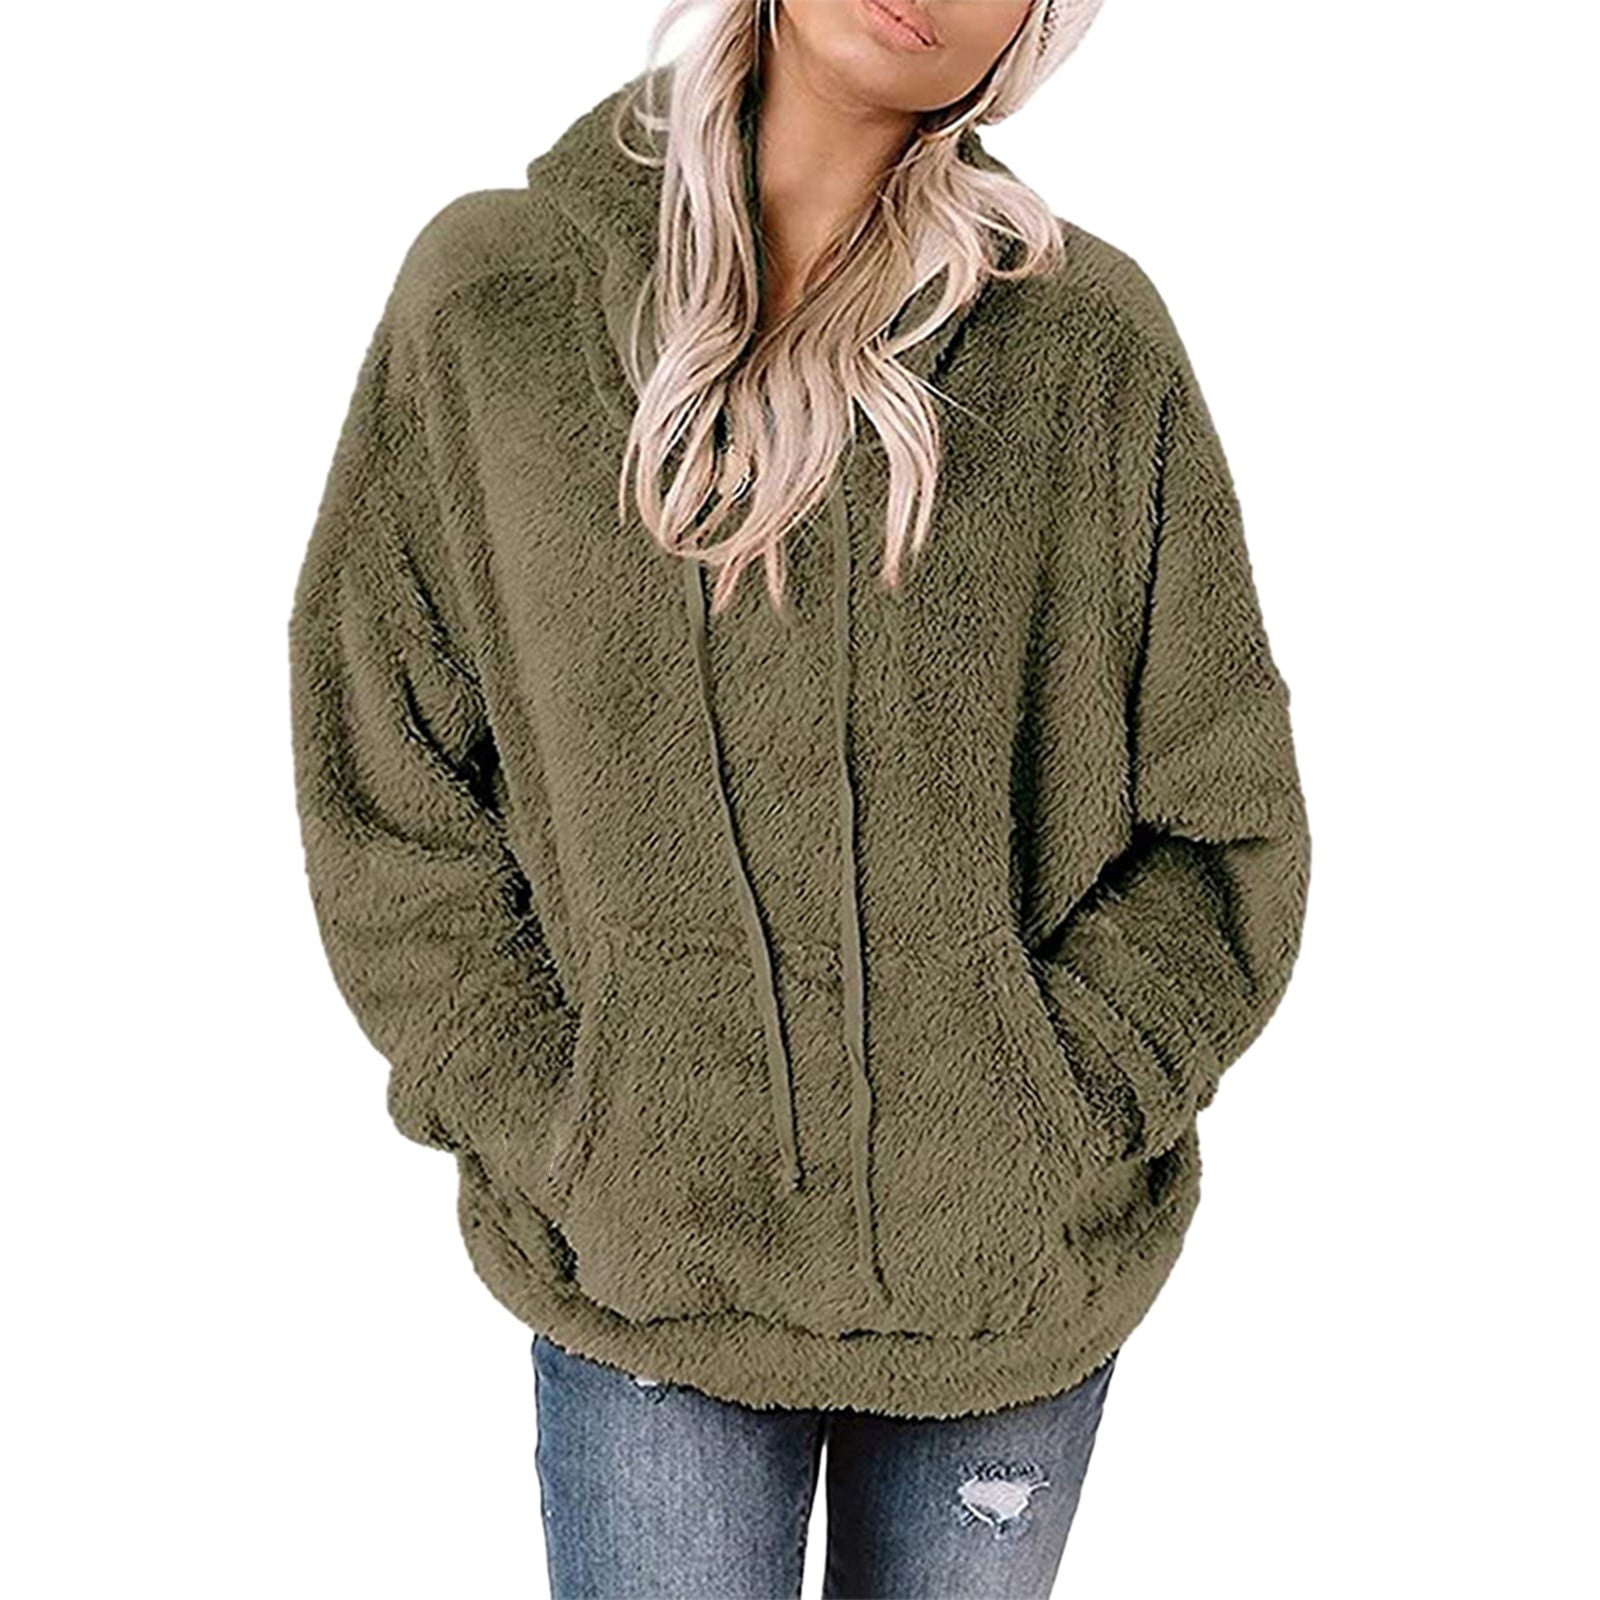 Dtydtpe Women's Long Sleeve Sherpa Pullover Fuzzy Sweatshirt Casual Loose  Fuzzy Hoodies with Pockets Green M